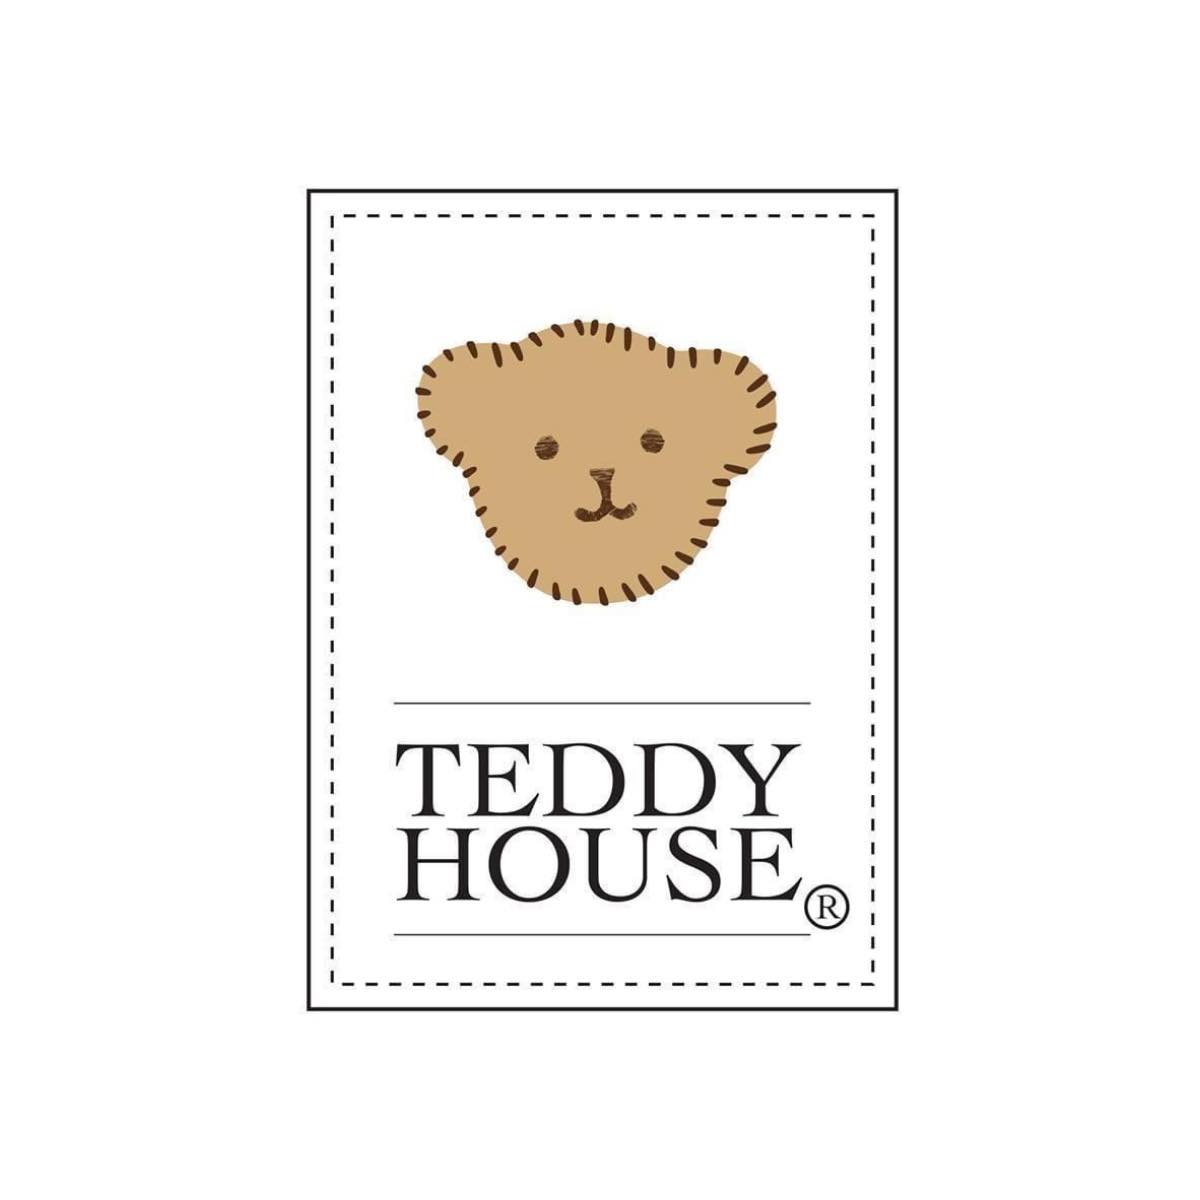 Teddy House International